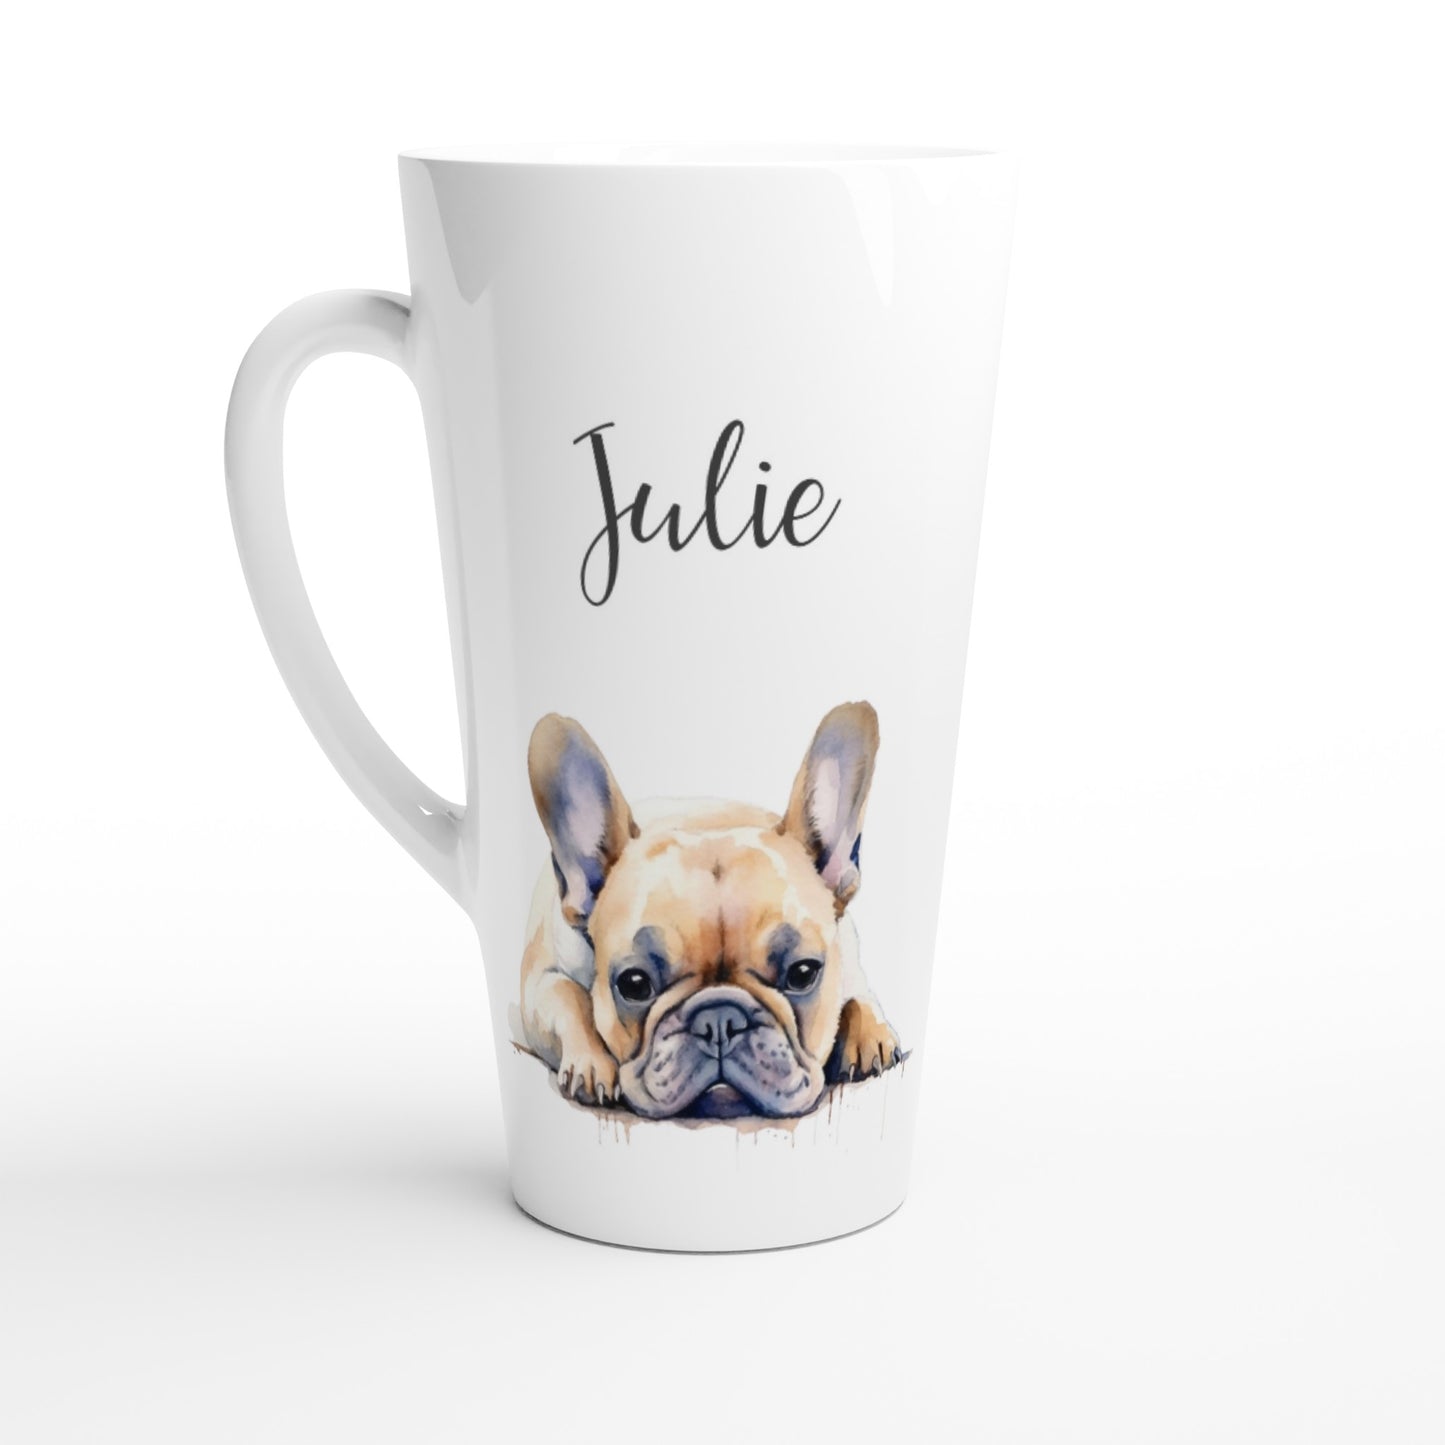 French bulldog latte mug